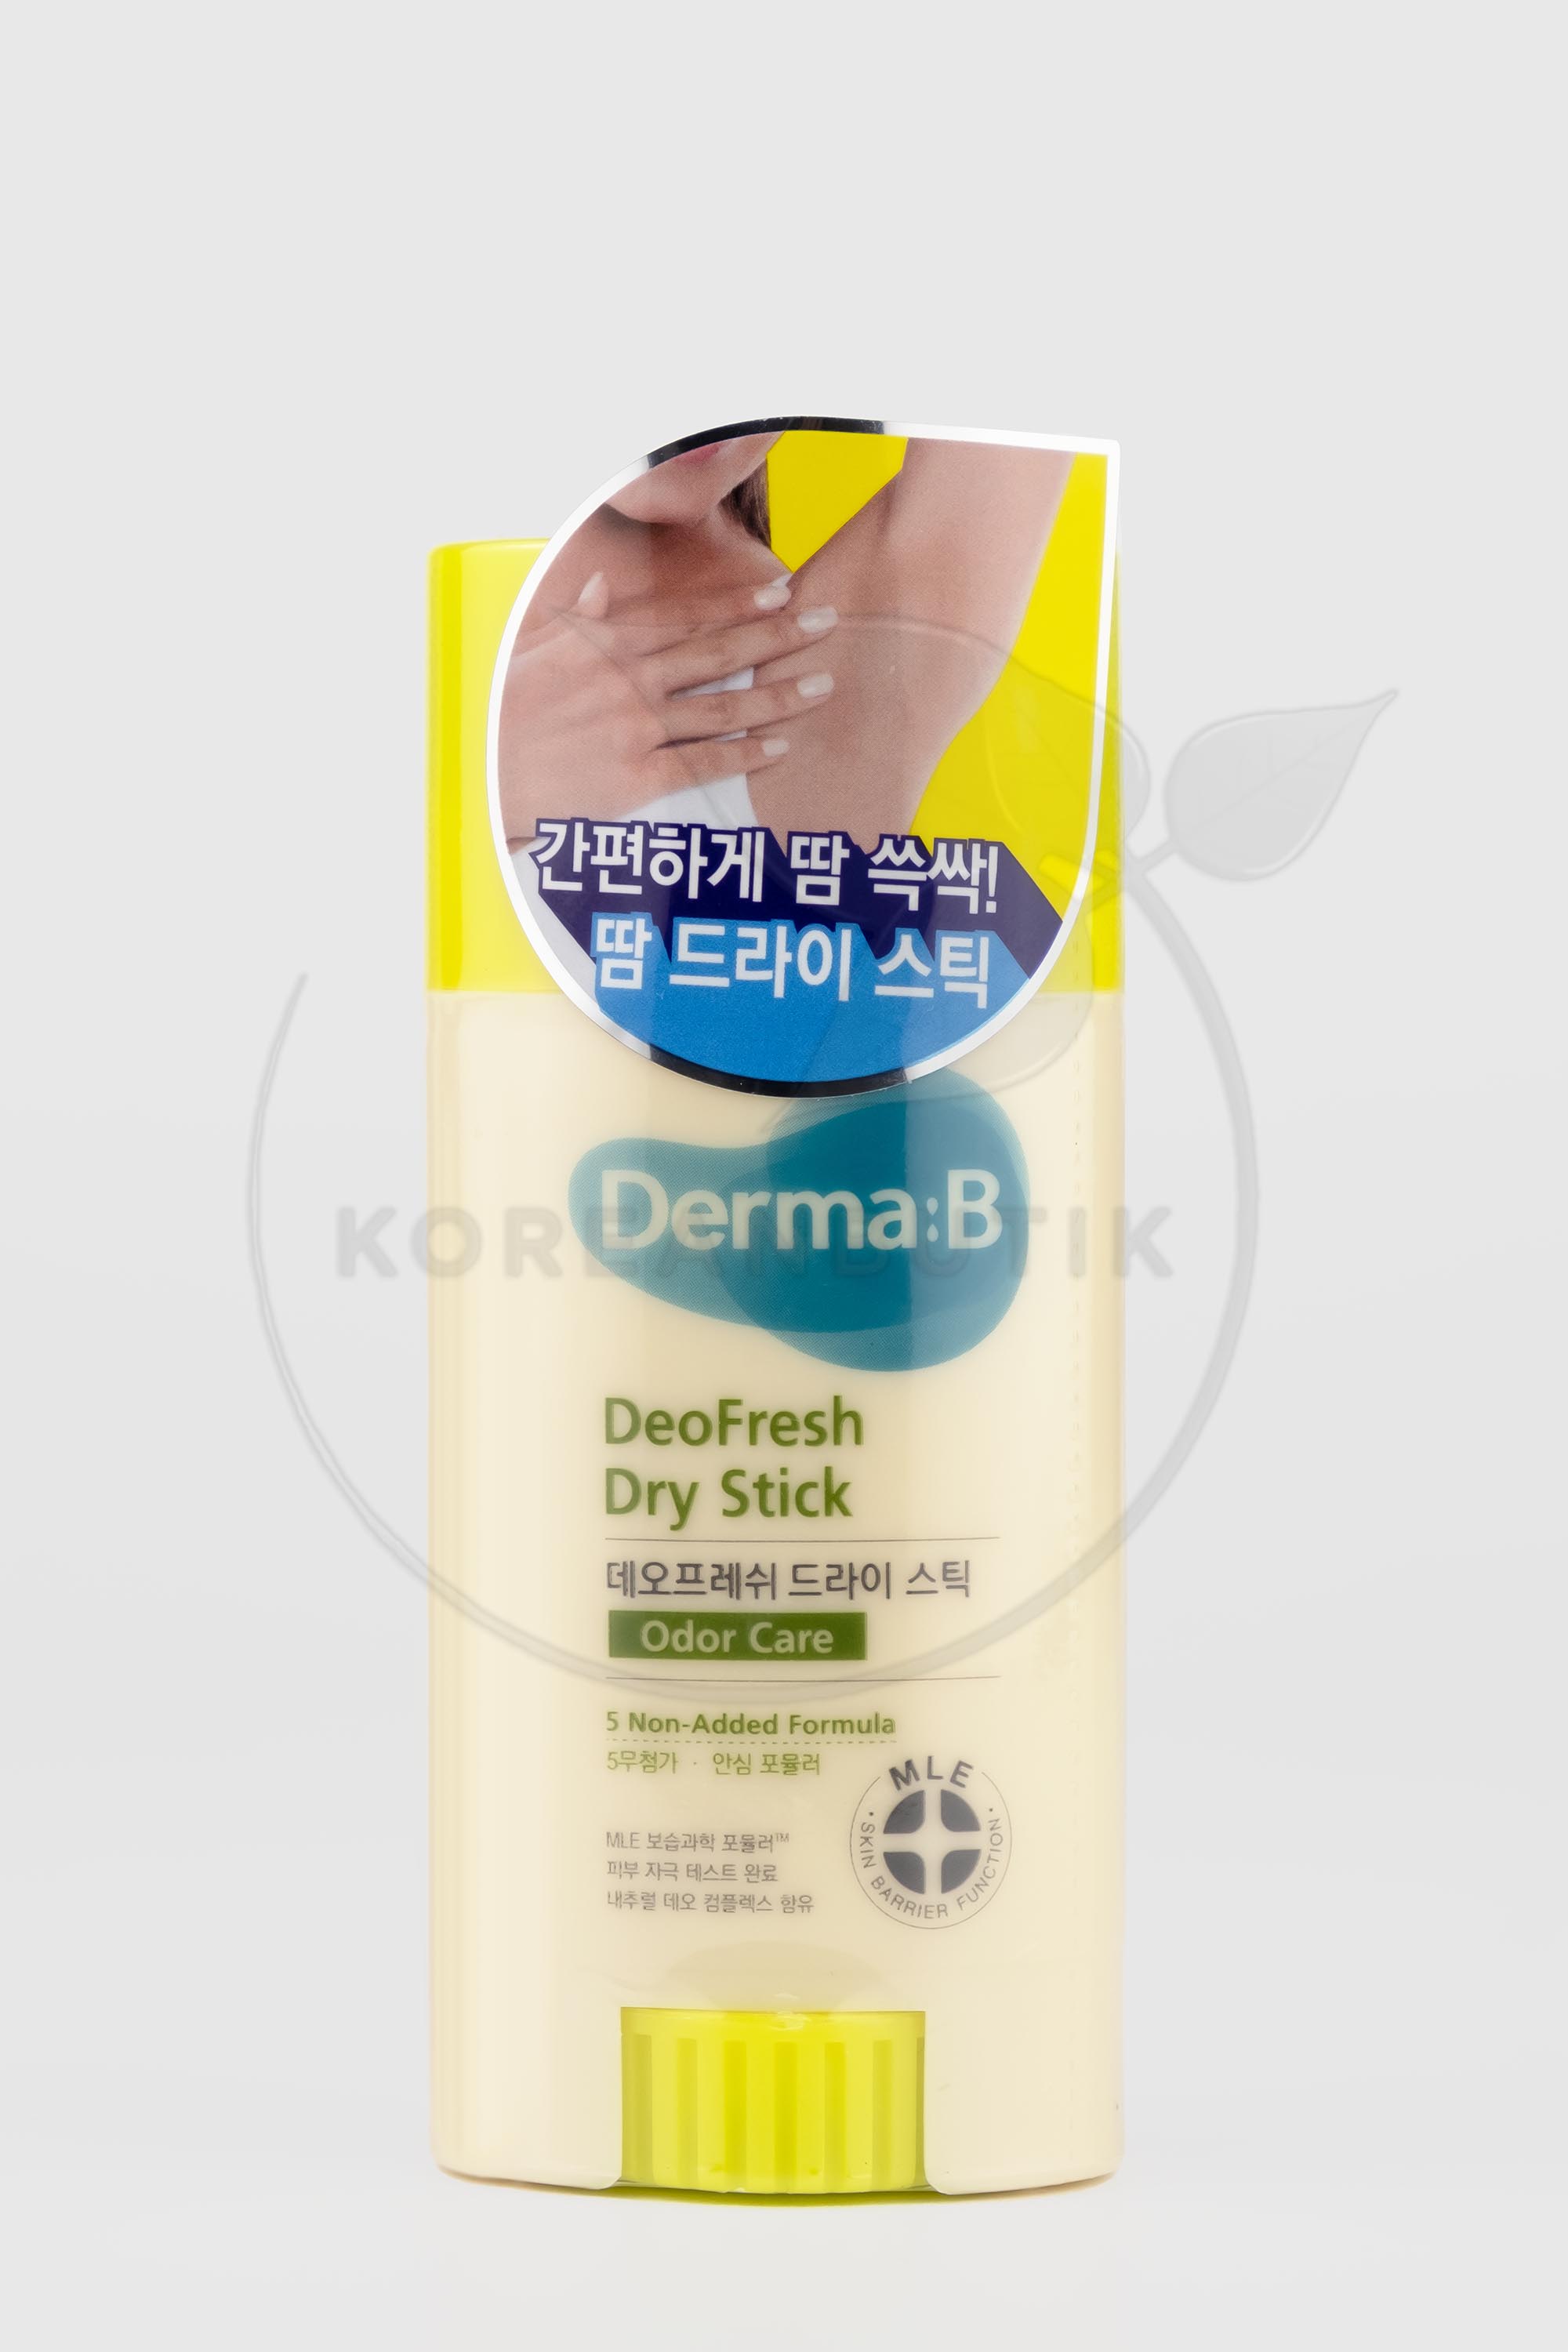  Derma-B DeoFresh Dry Stick 40g..